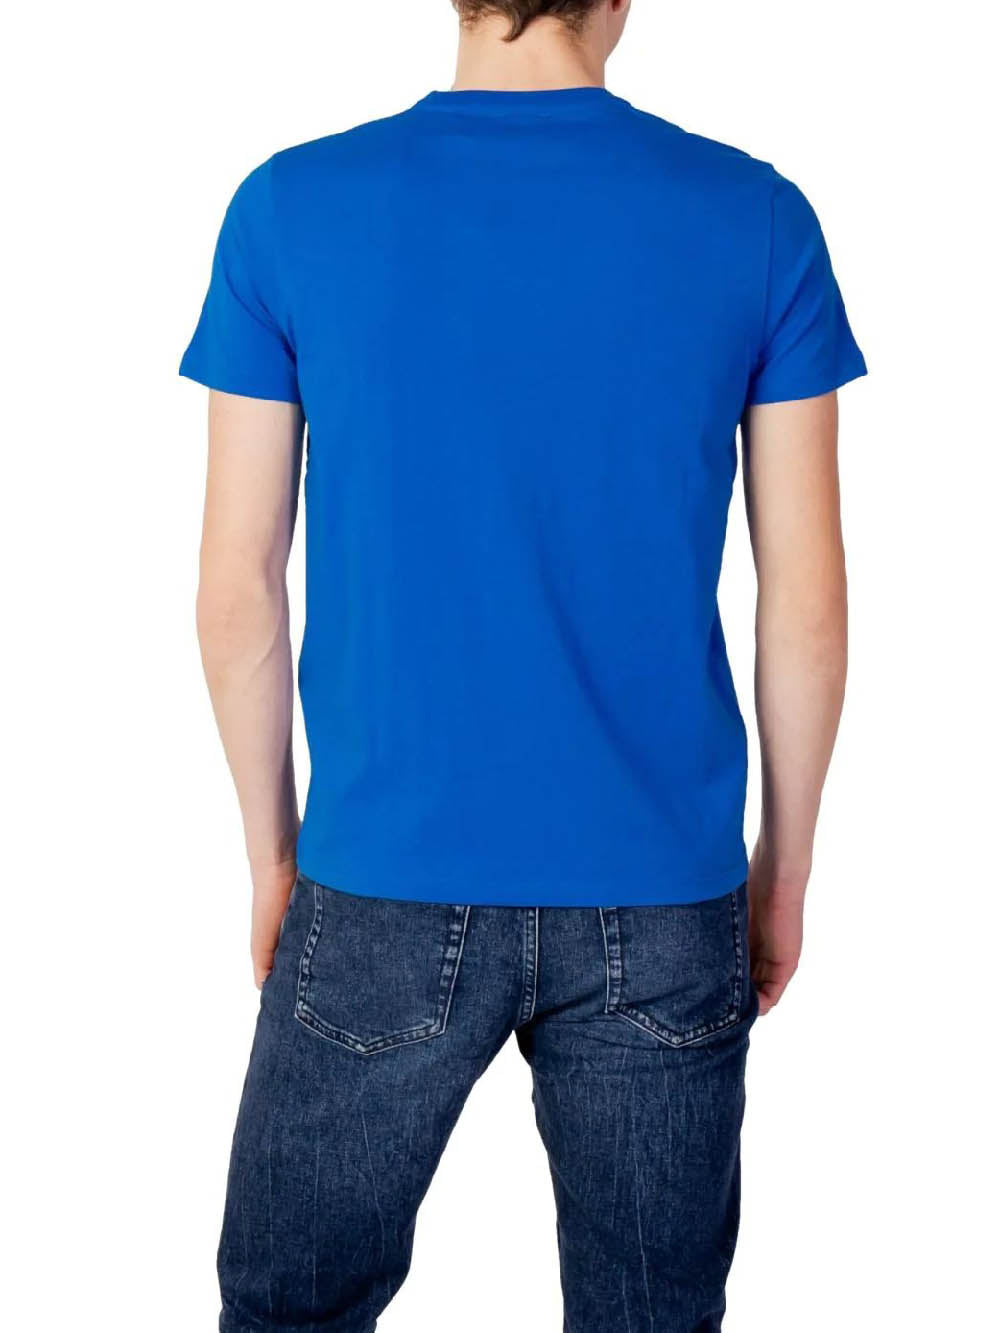 U.S. Polo Assn. T-shirt Uomo 65060 49351 Bluette